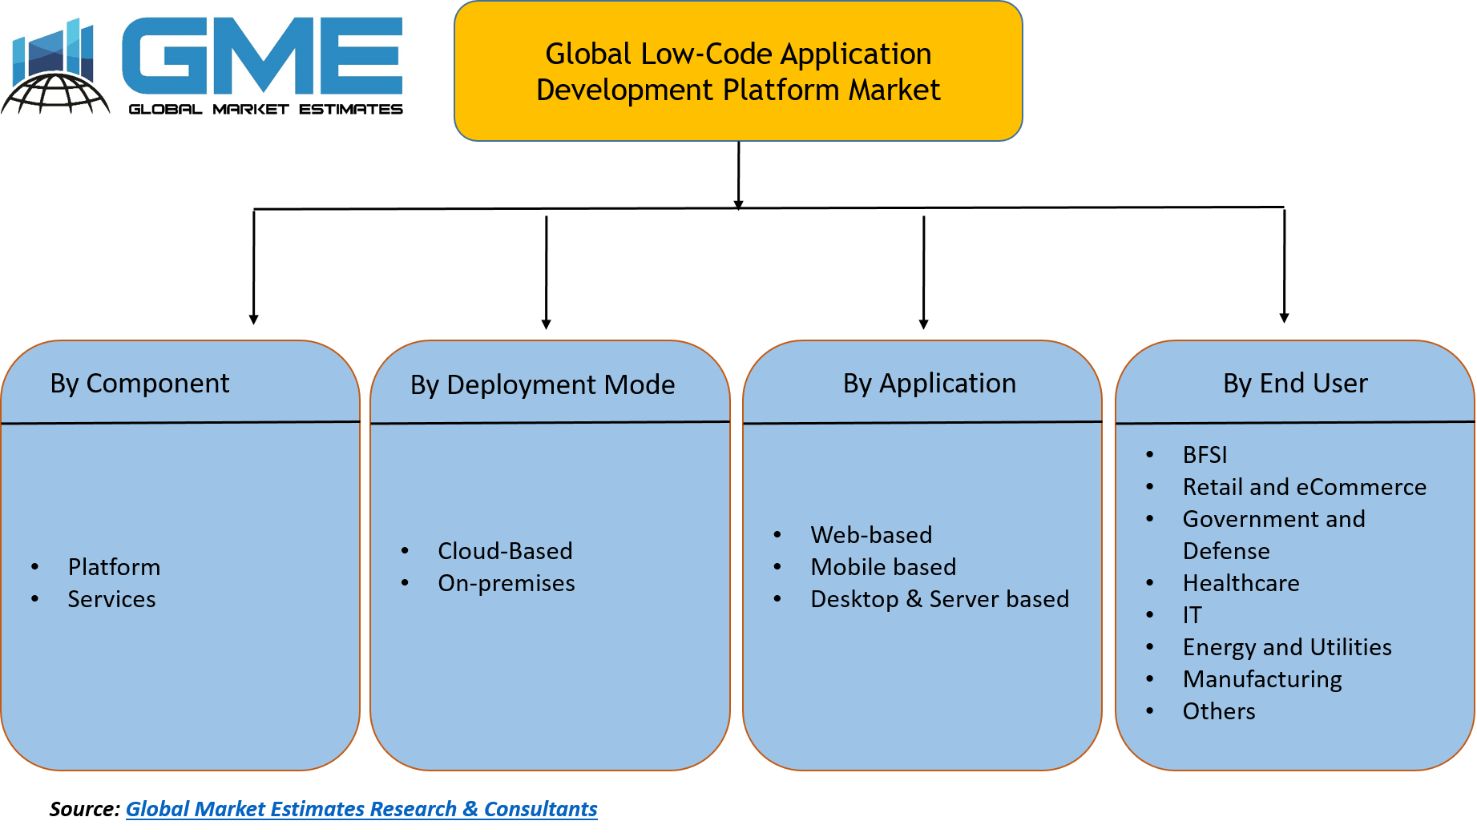 Low-Code Application Development Platform Market Segmentation